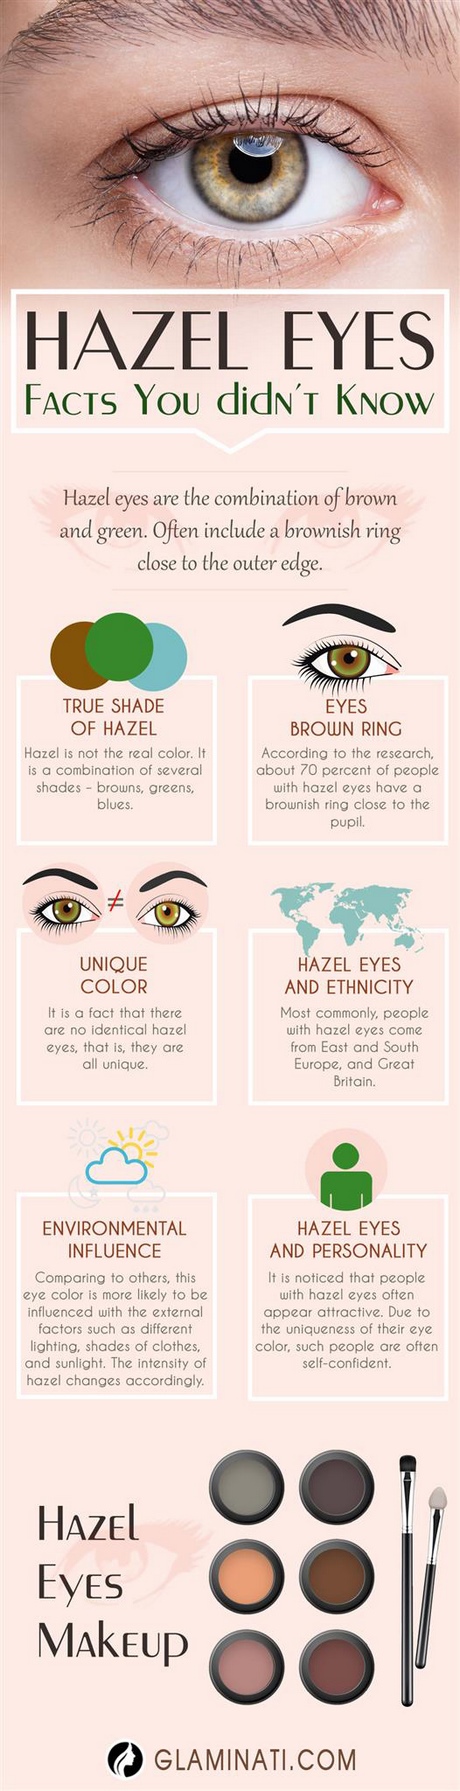 makeup-tutorial-hazel-eyes-brown-hair-06_4 Make-up tutorial hazelaar ogen Bruin haar